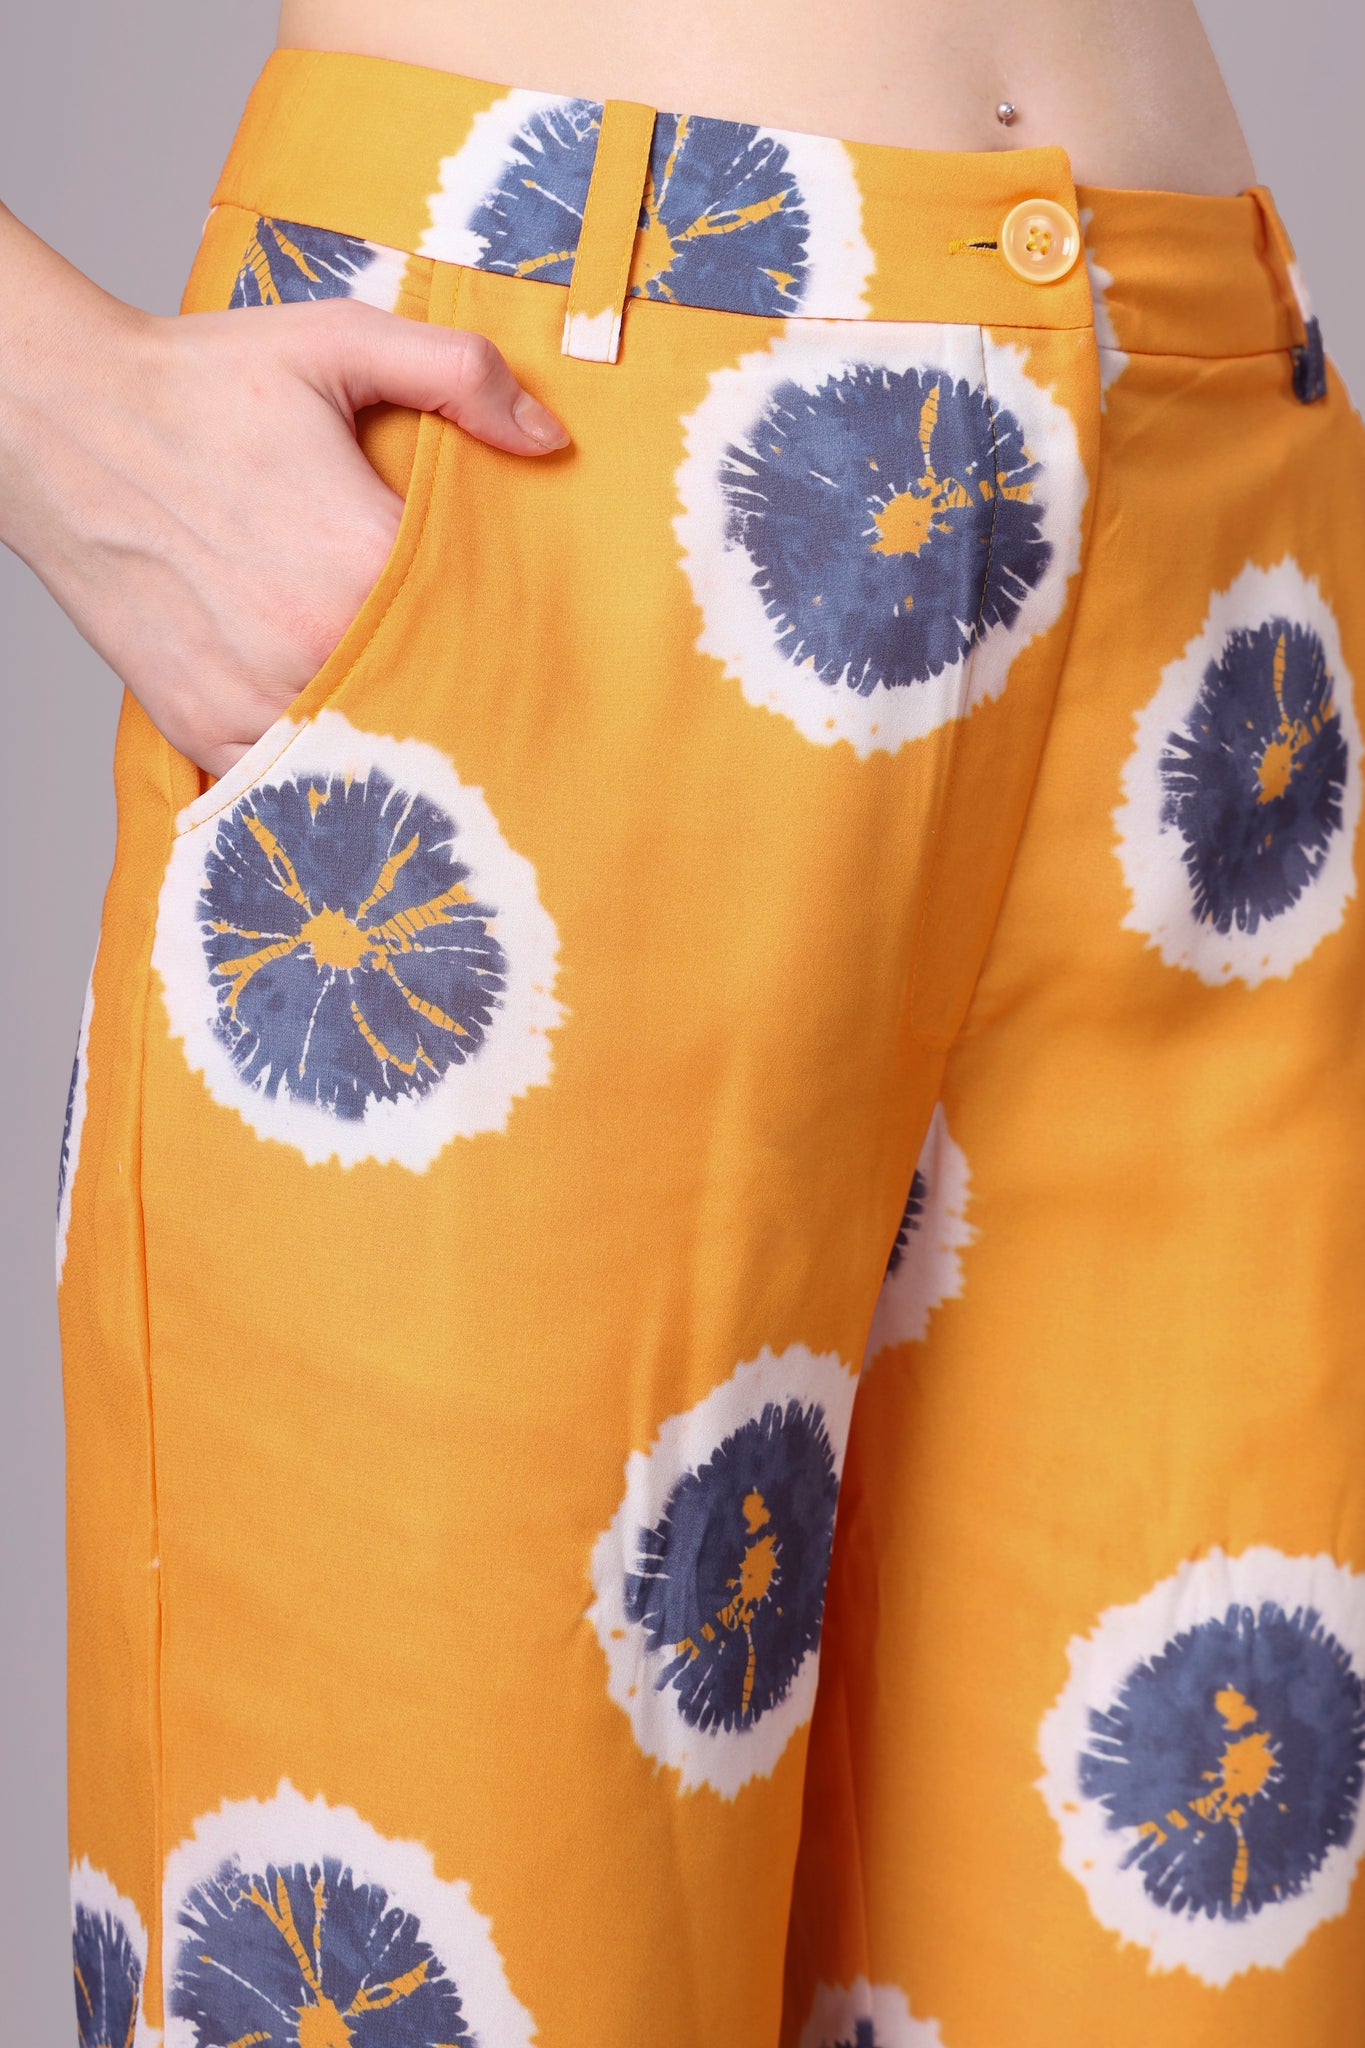 Exclusive Orange Women's Trousers